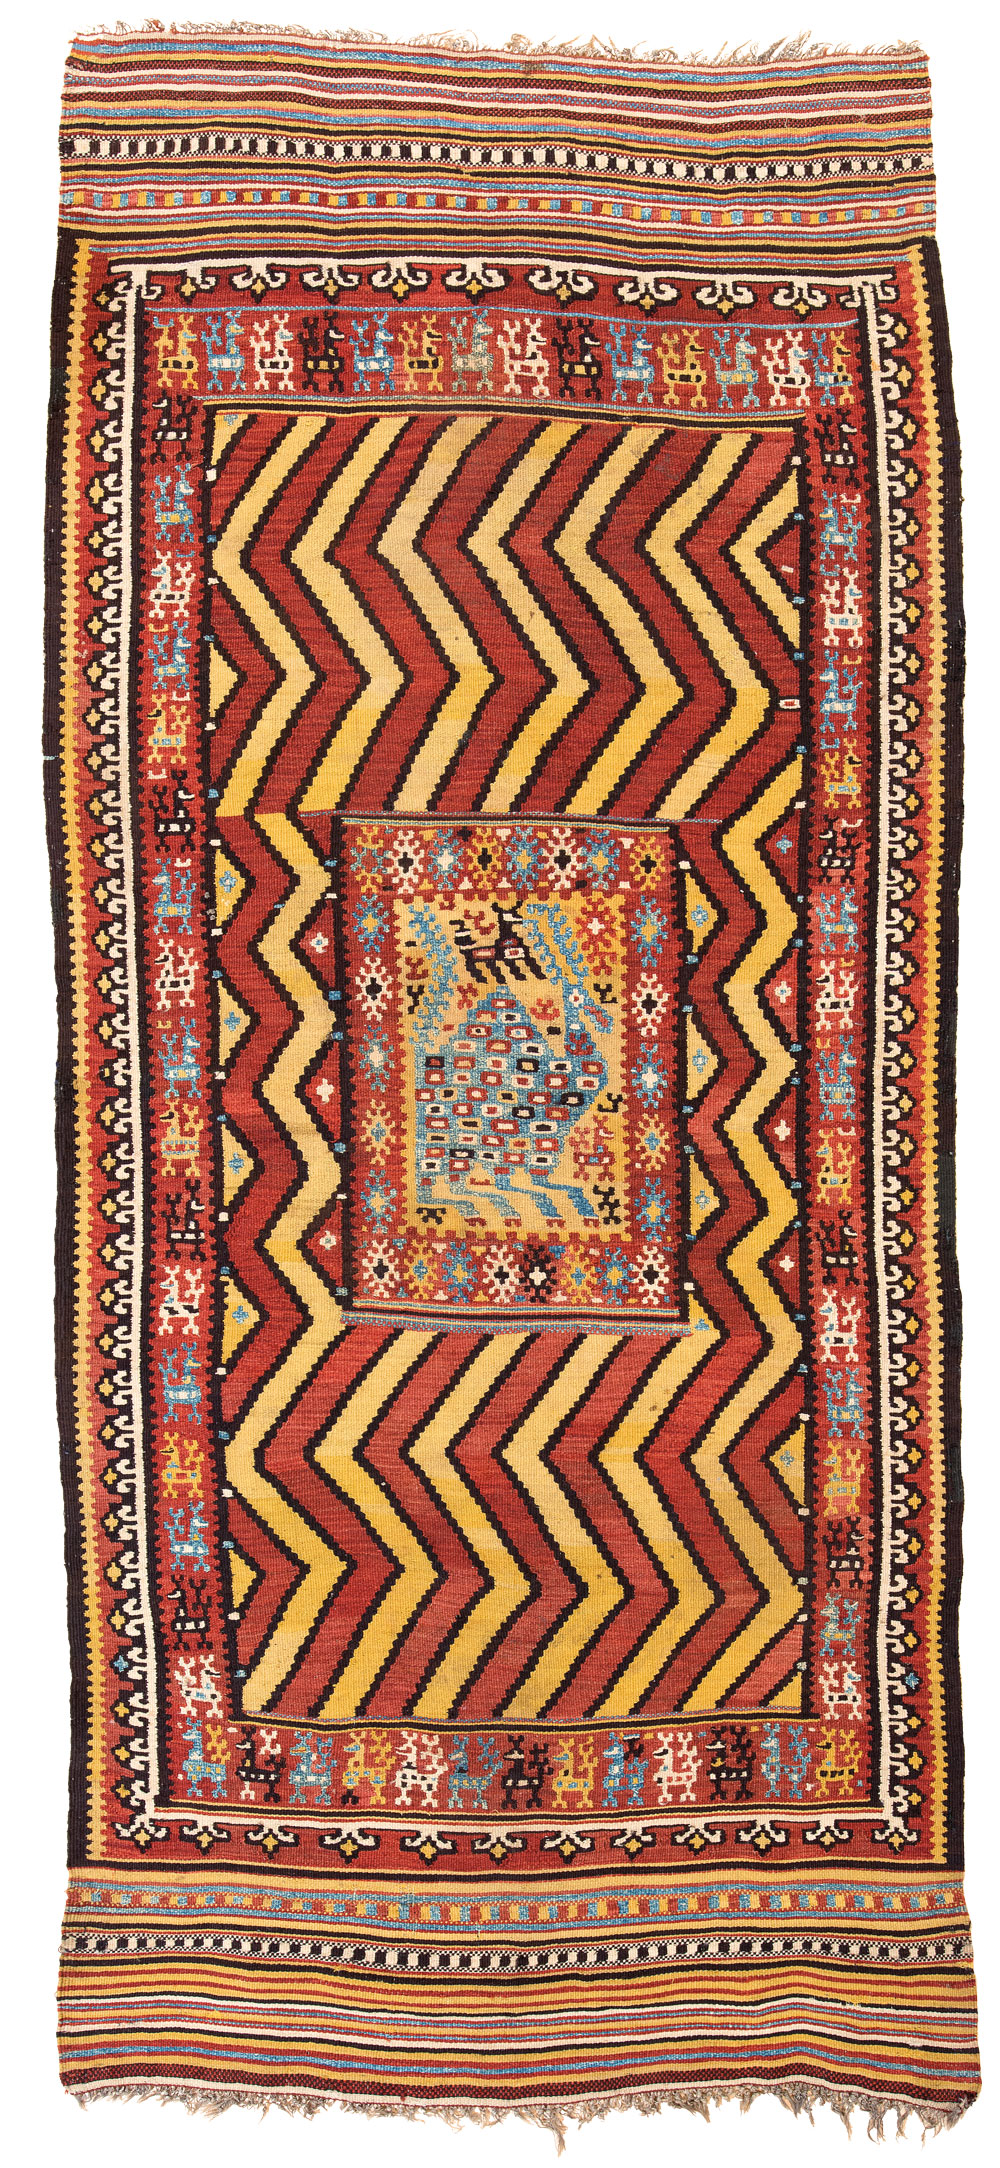 Click here to see Alberto Boralevi's article on a rare Italian peasant rug that will be shown at Sartirana